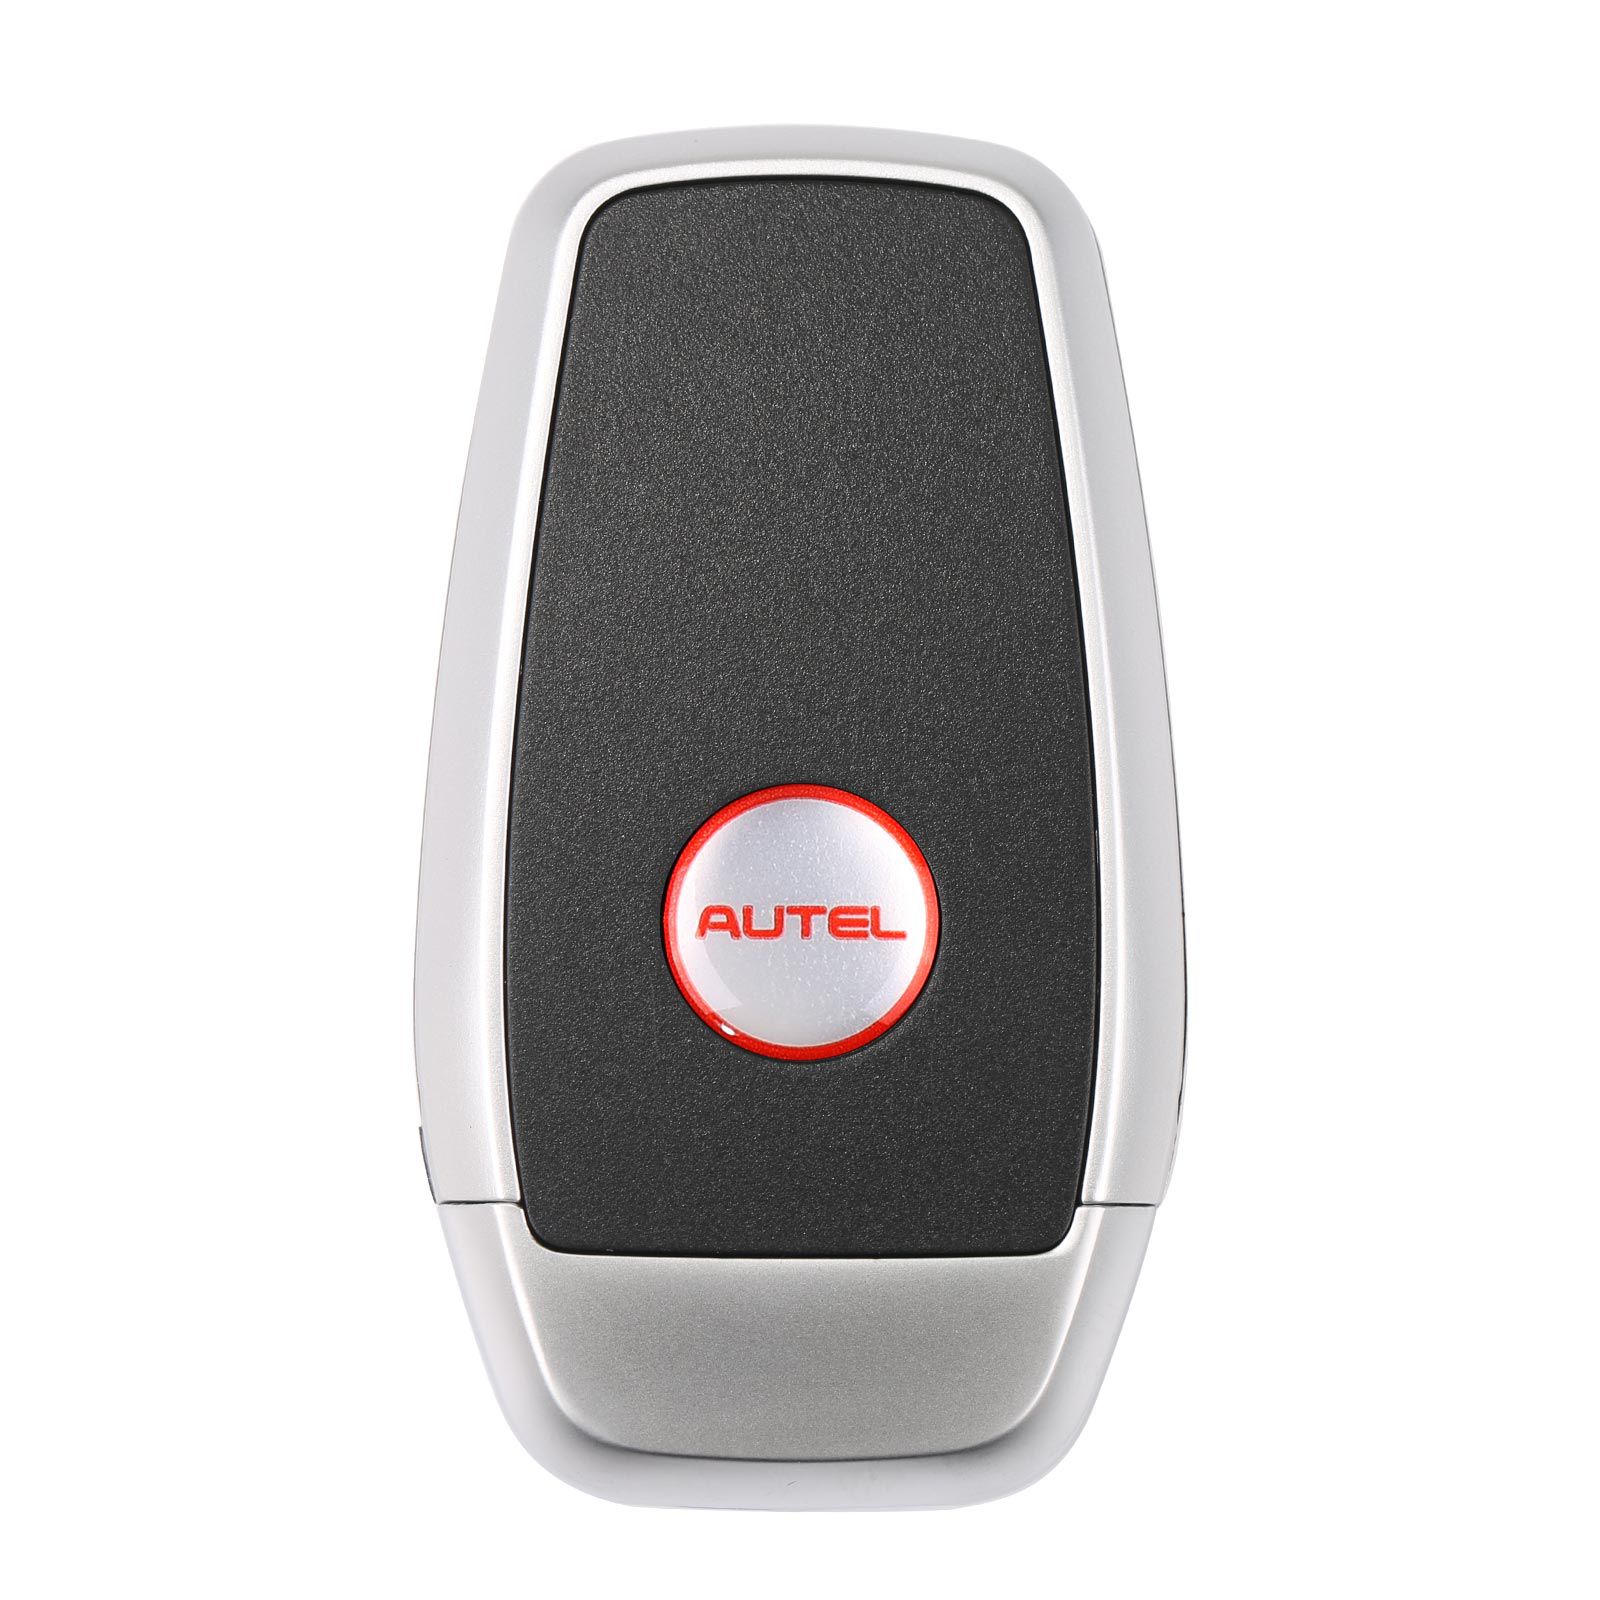 AUTEL IKEYAT002AL 2 Buttons Independent Universal Smart Key 5pcs/lot